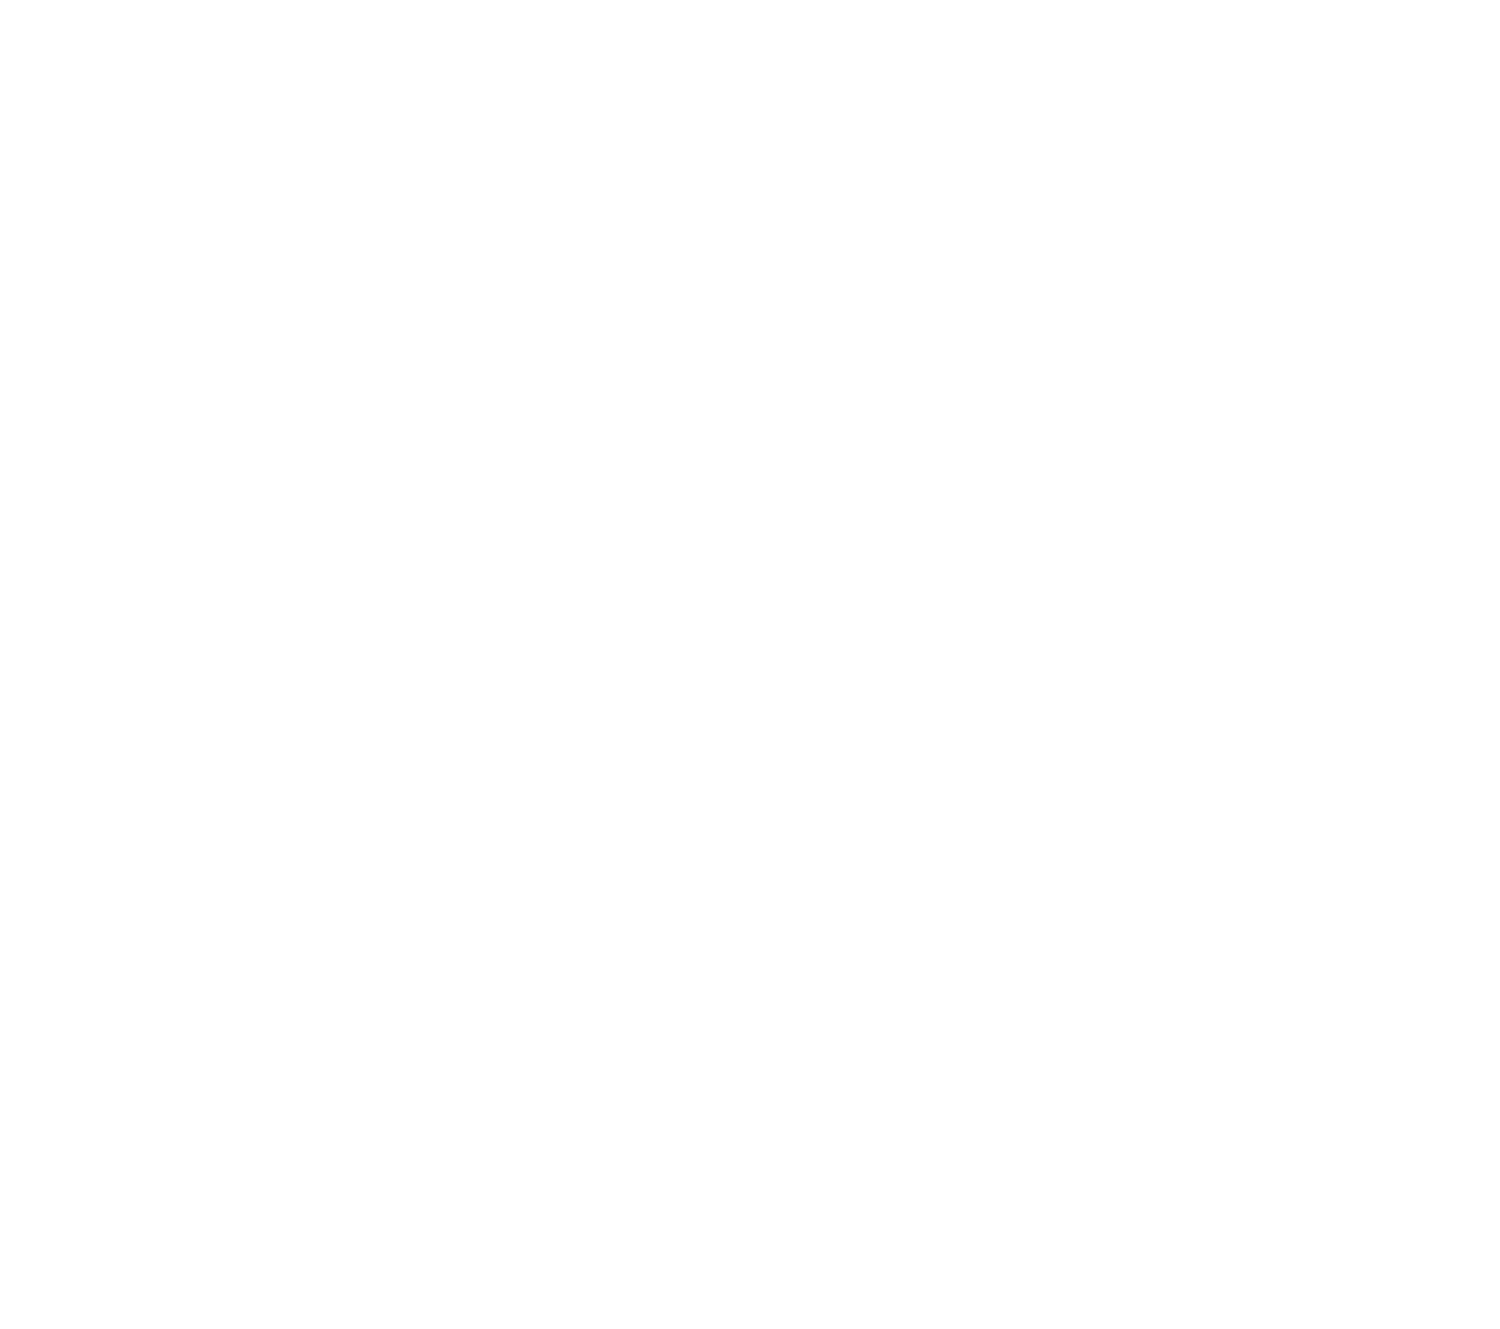 Blossom Street Gallery 